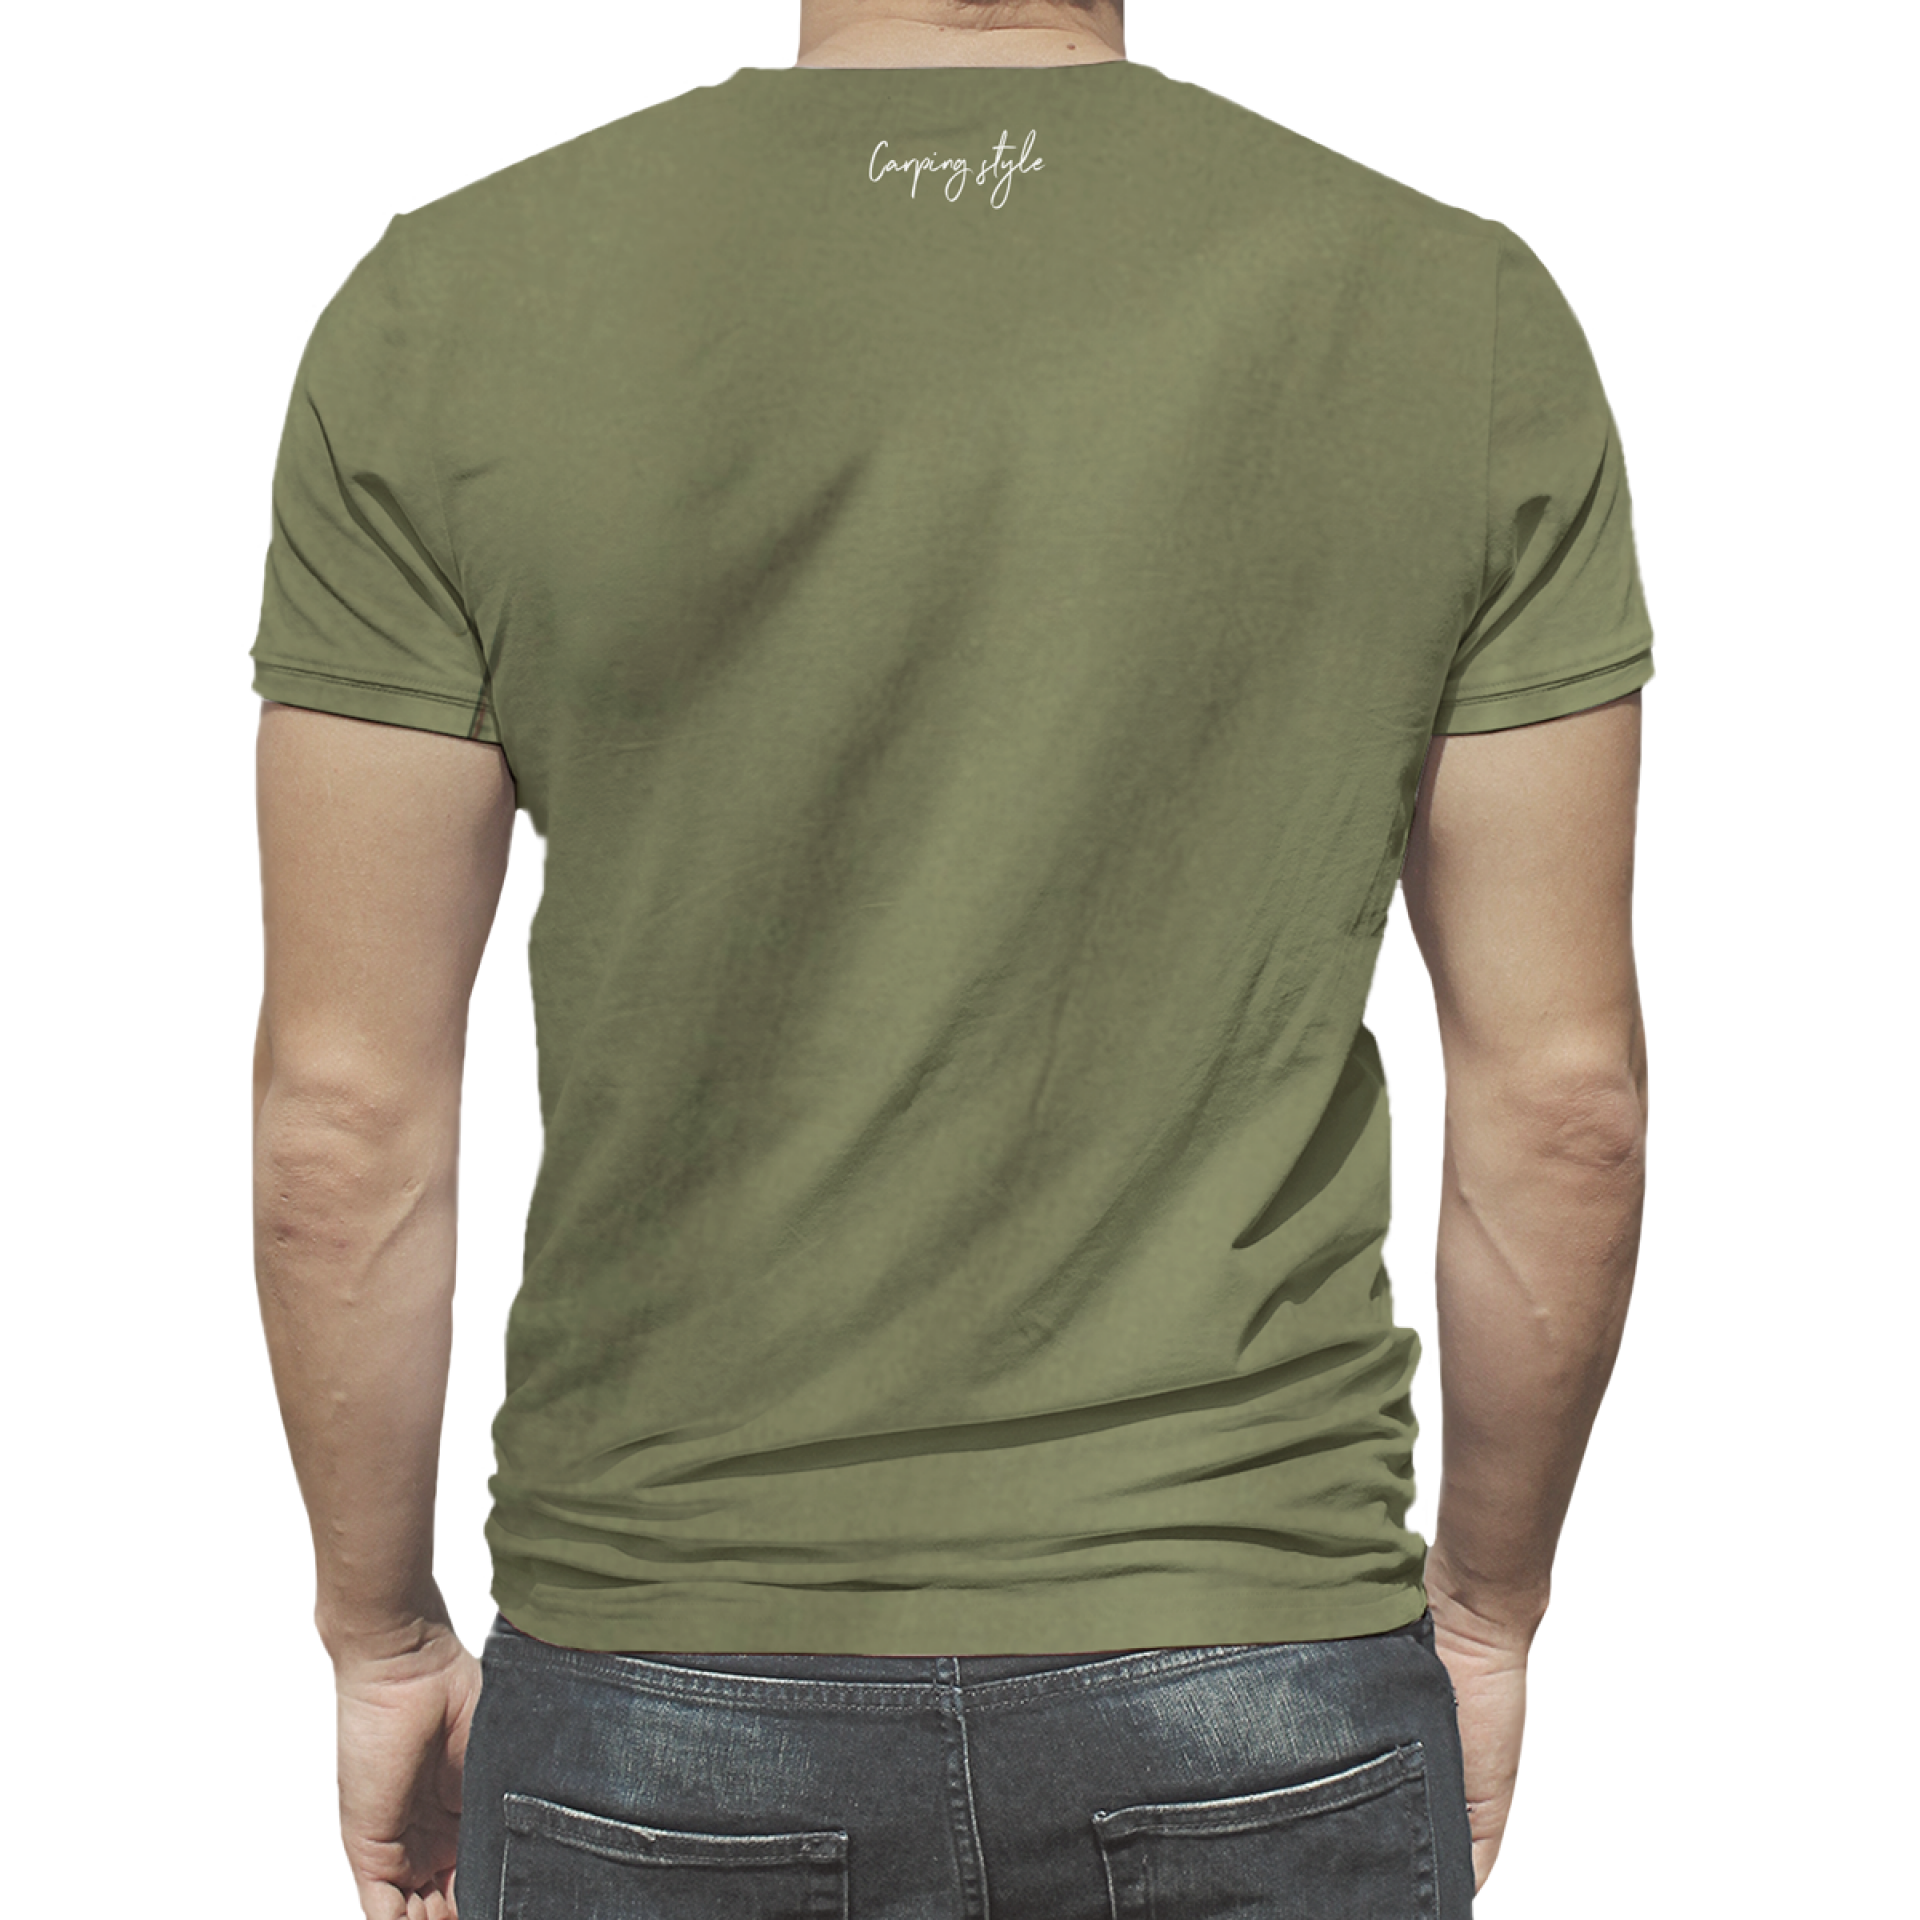 Rockworld Carping Style - Olive Green Men's T-Shirt